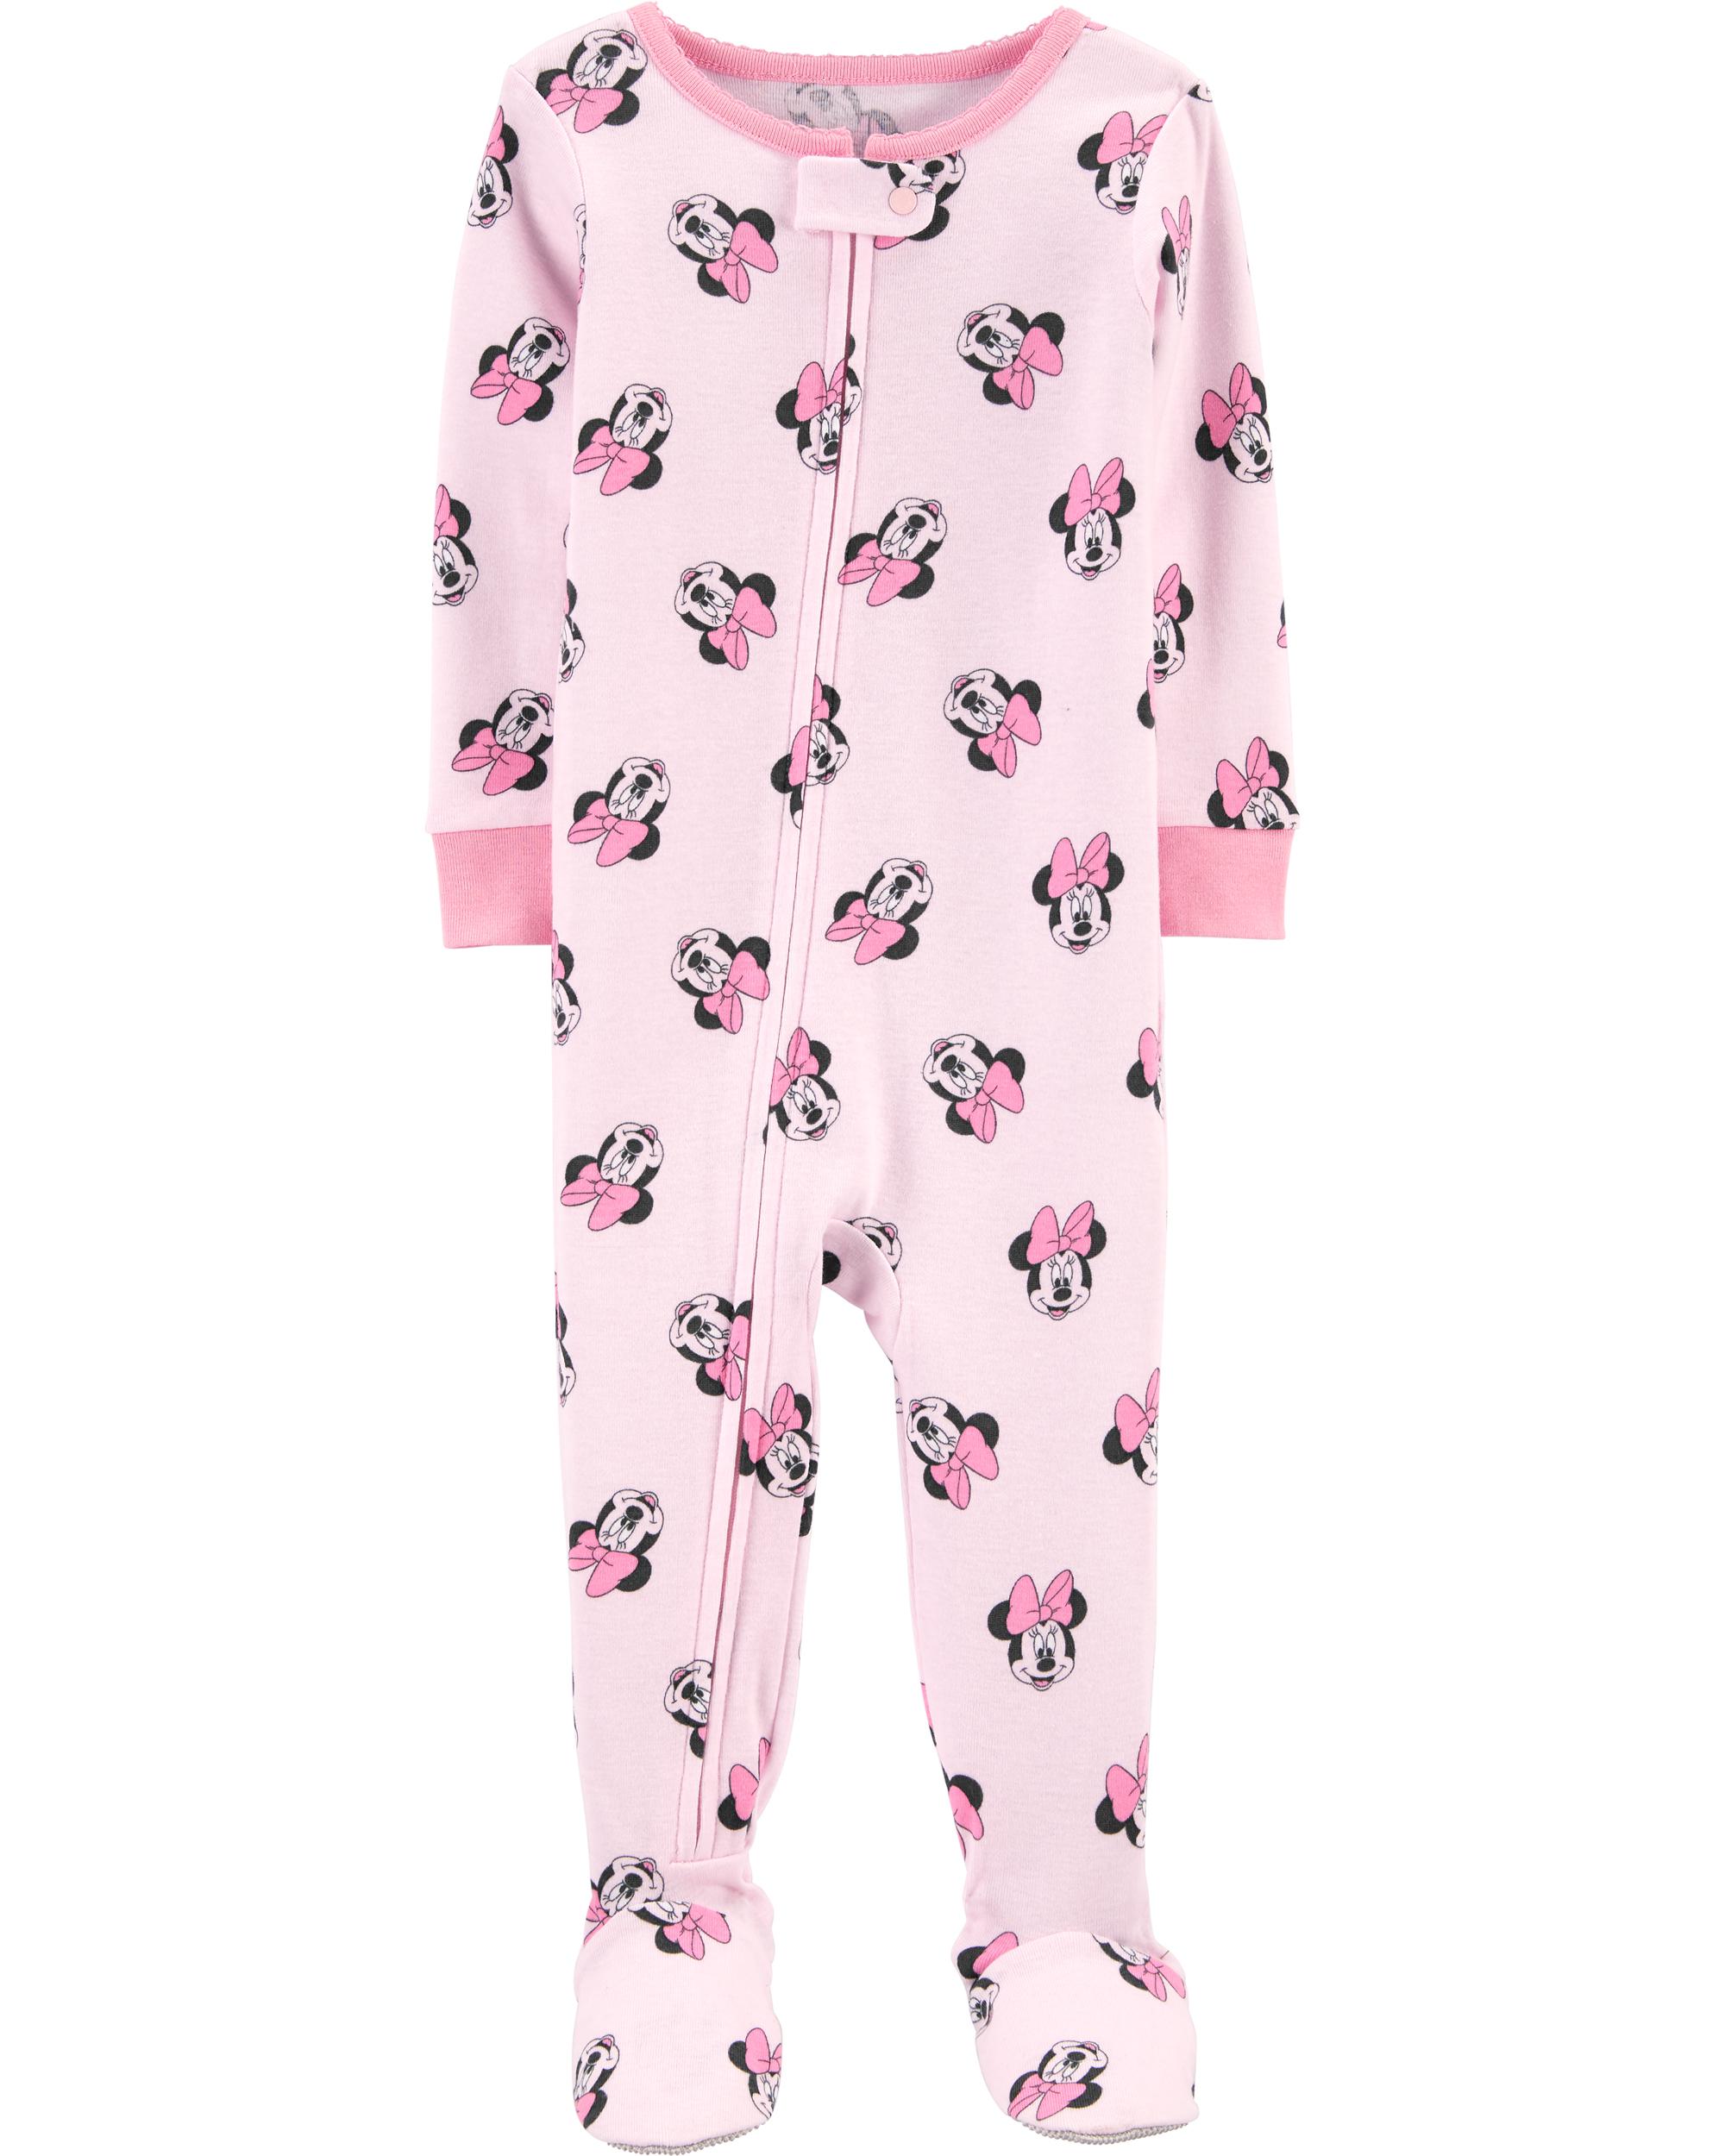 Toddler 1-Piece 100% Snug Fit Cotton Footie Pyjamas